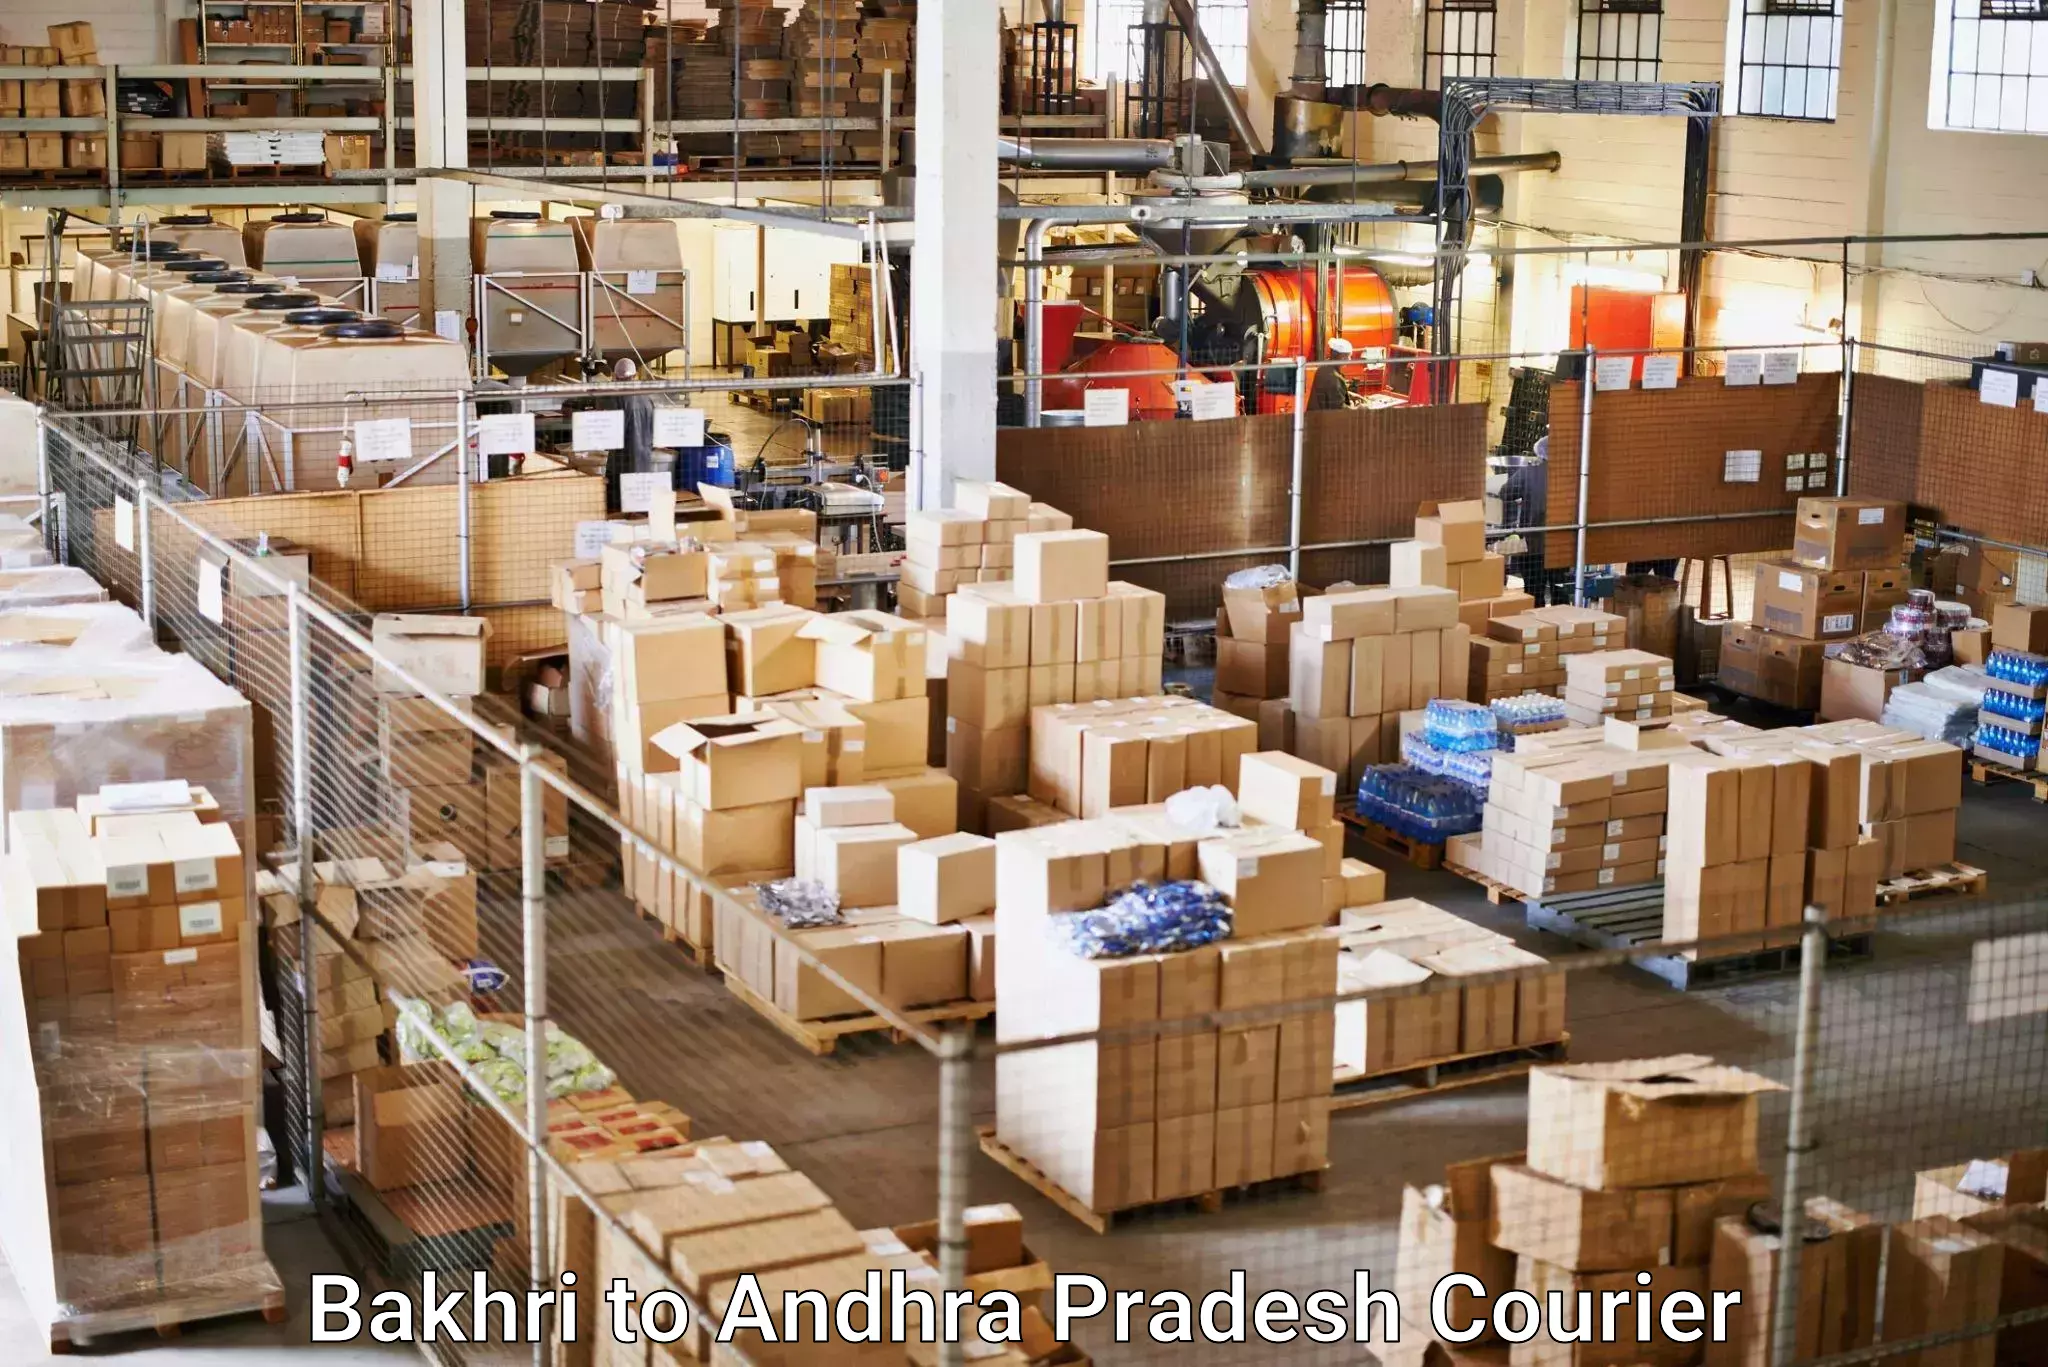 Express delivery capabilities Bakhri to Galiveedu